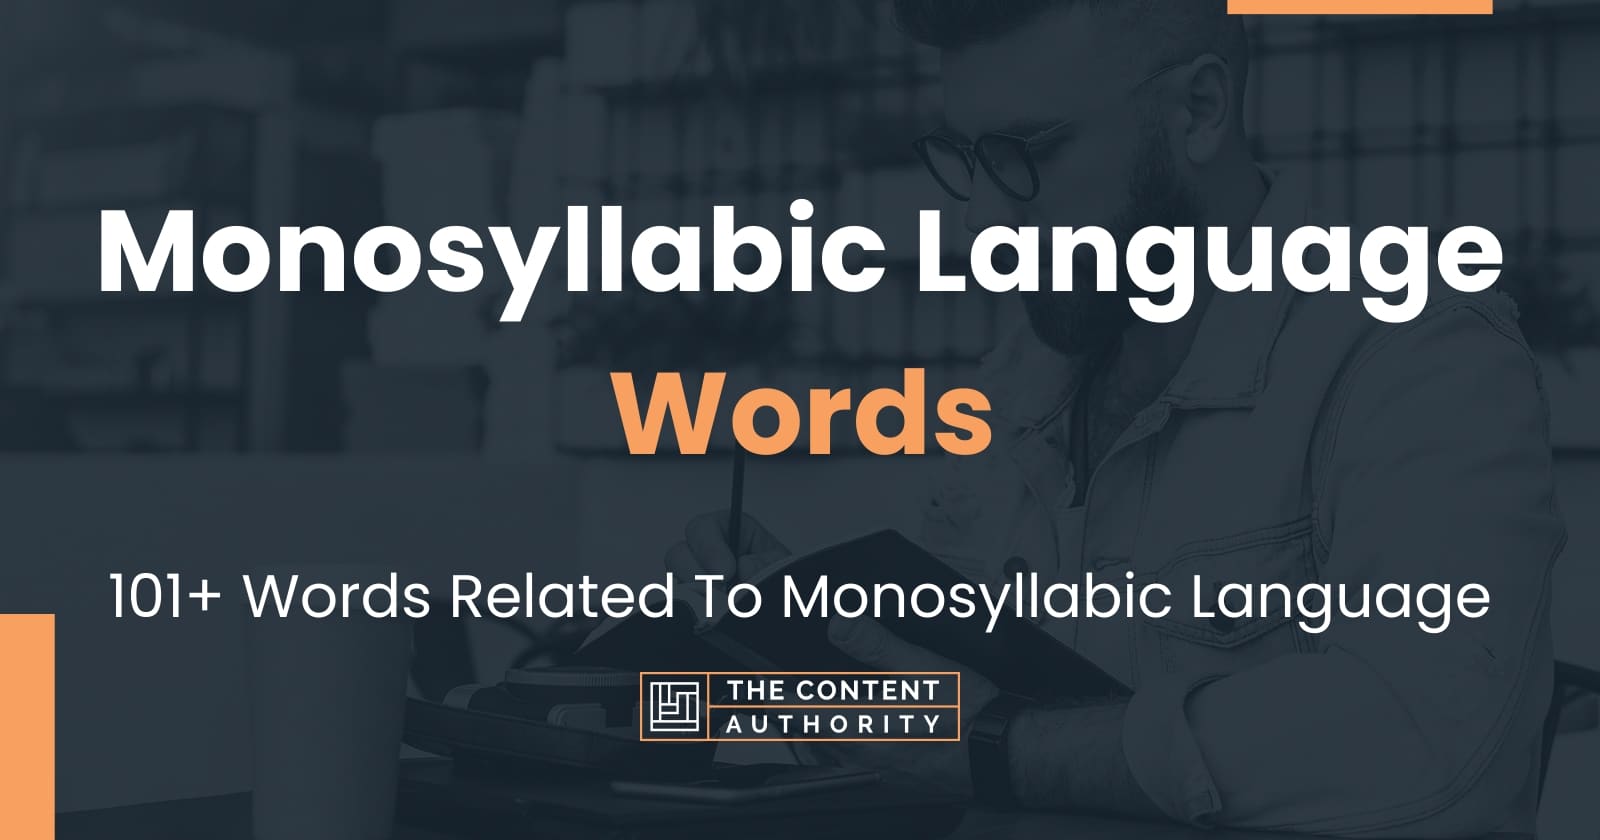 Monosyllabic Language Words - 101+ Words Related To Monosyllabic Language